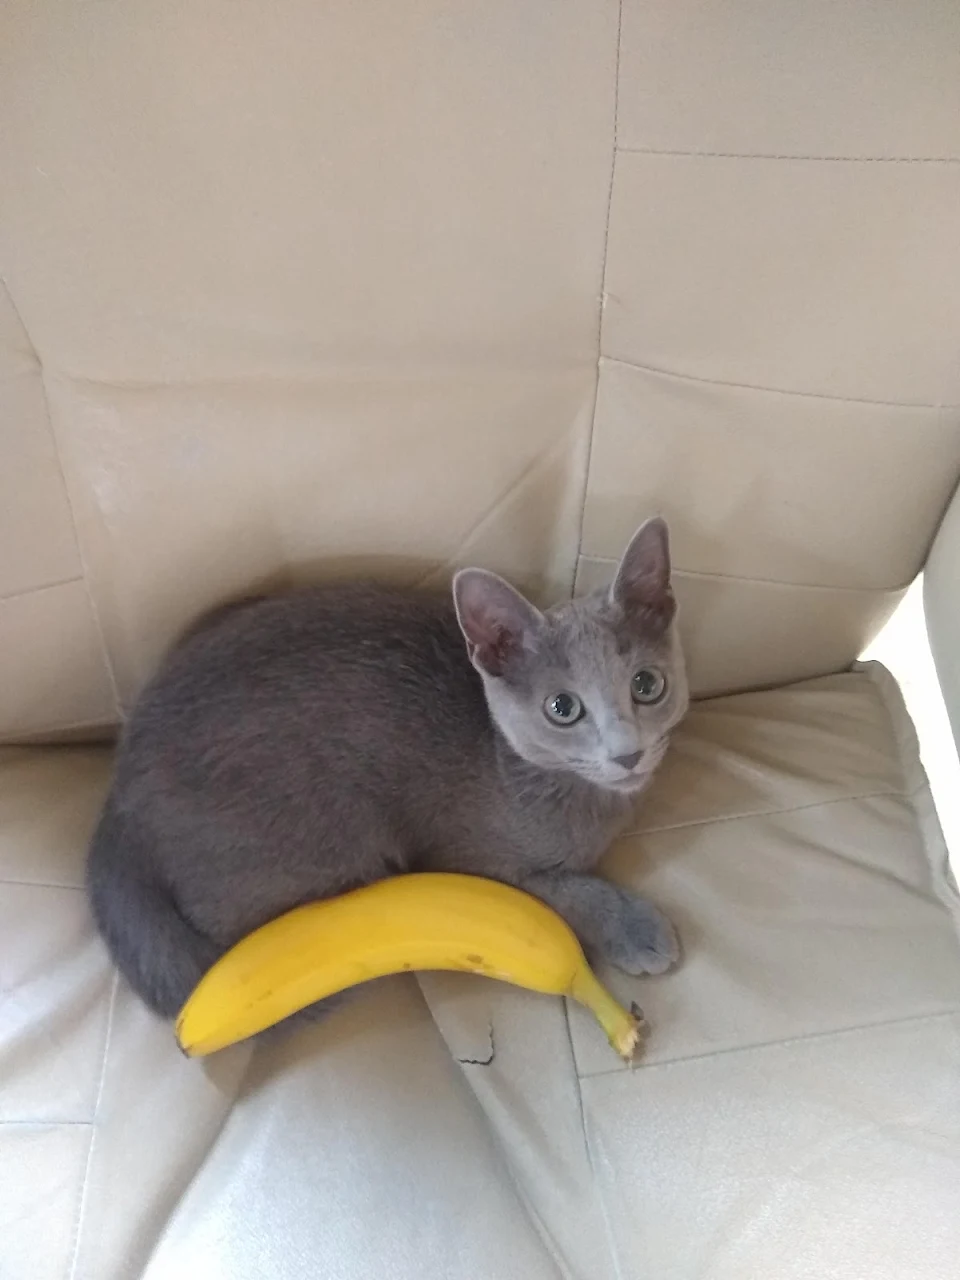 My kitten, banana for scale